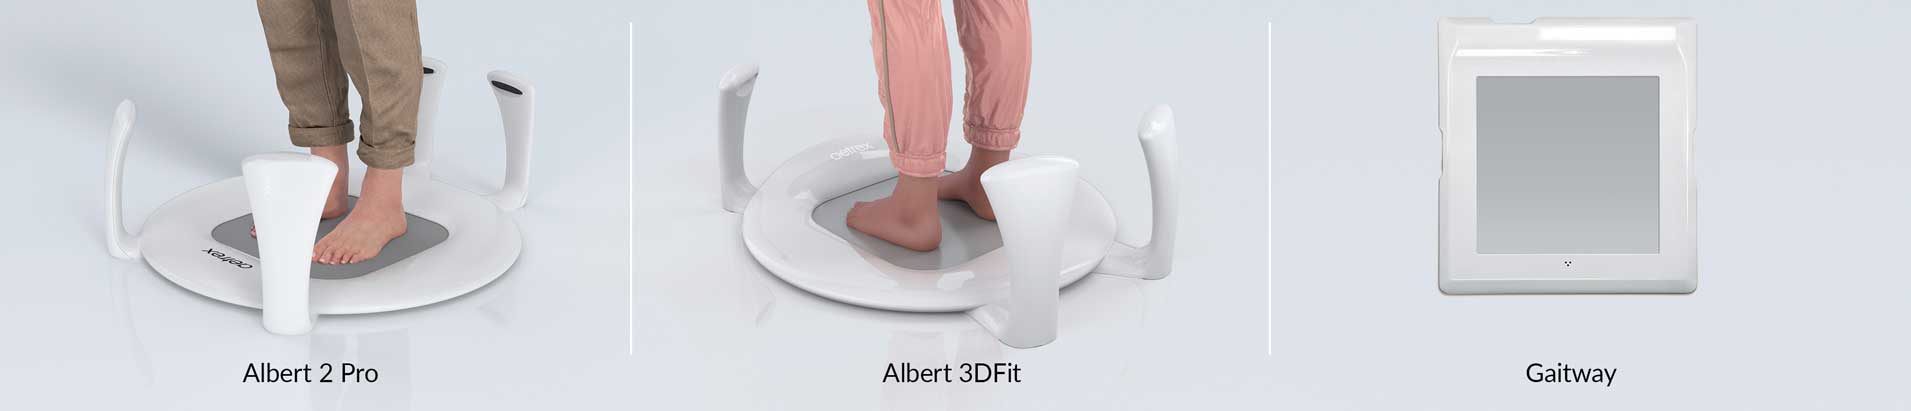 Aetrex Foot Scanners